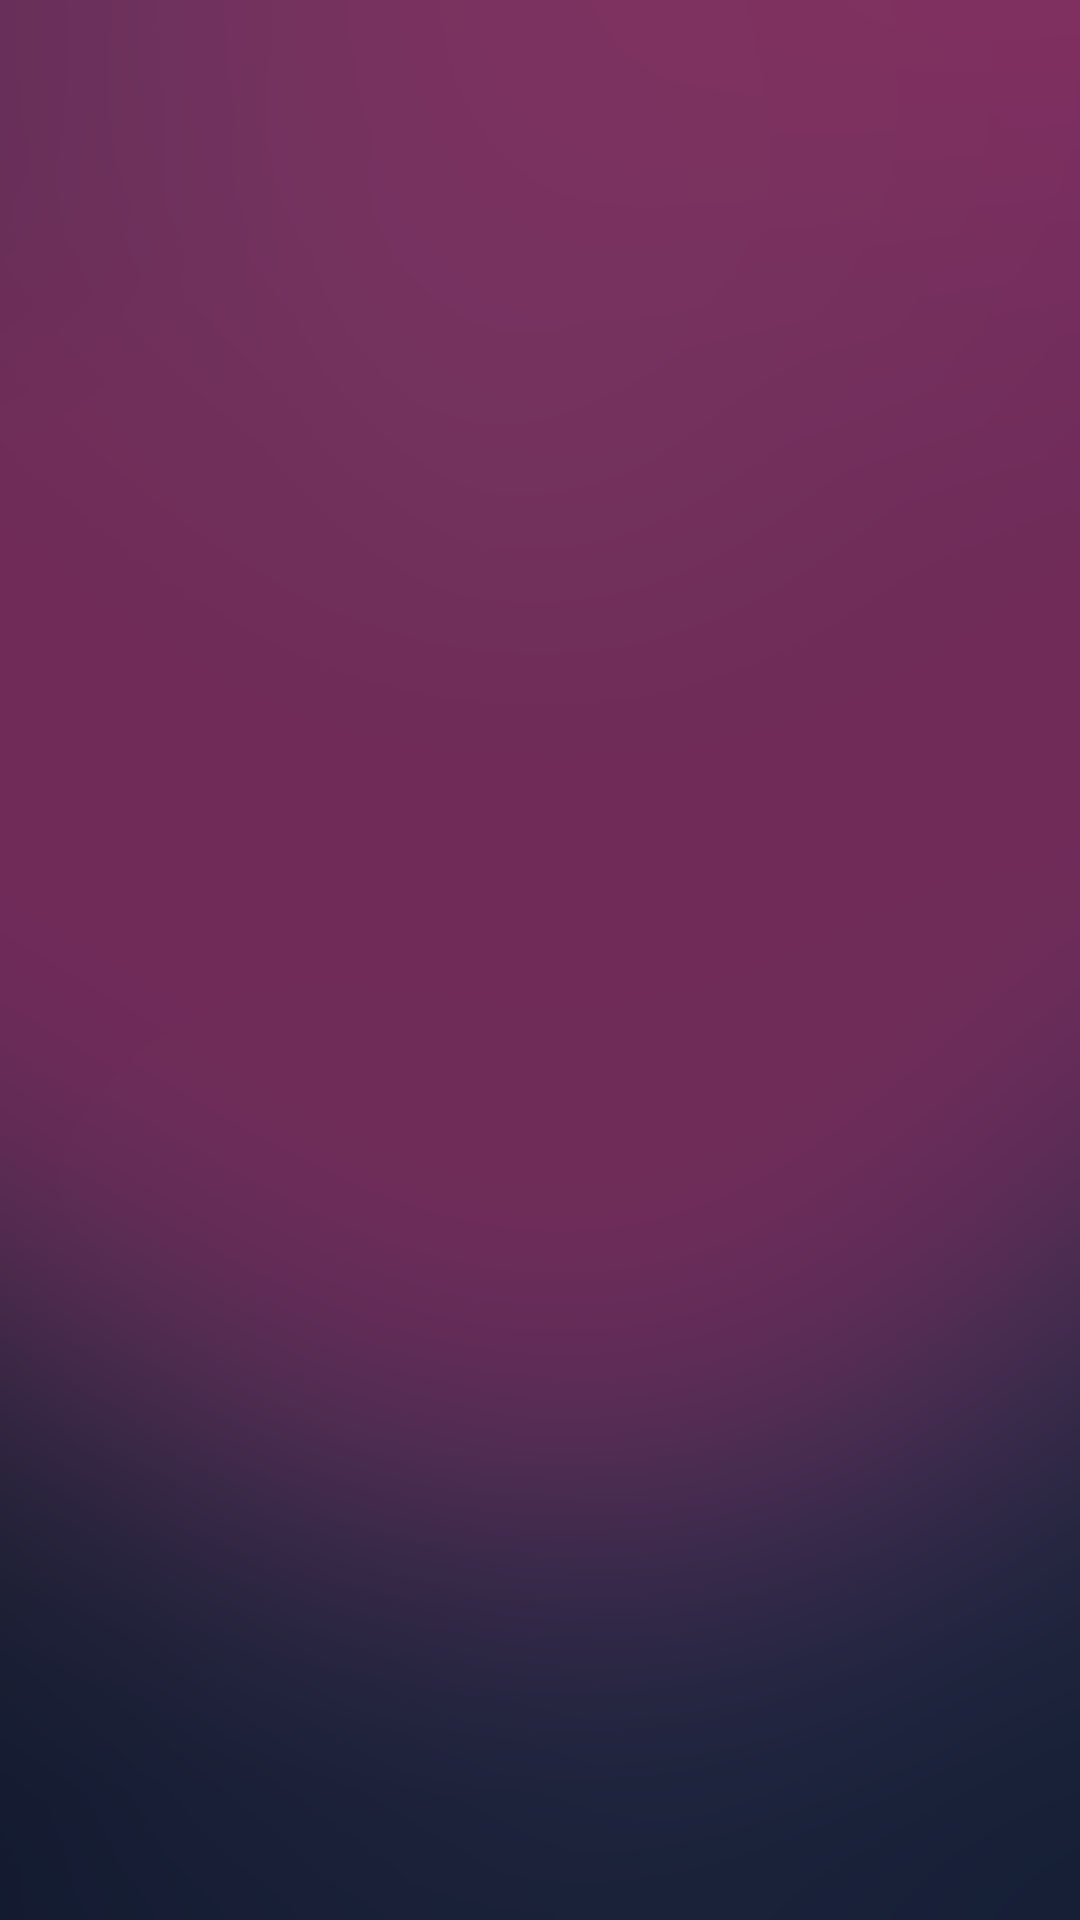 Simple Purple Gradient Samsung Android Wallpaper